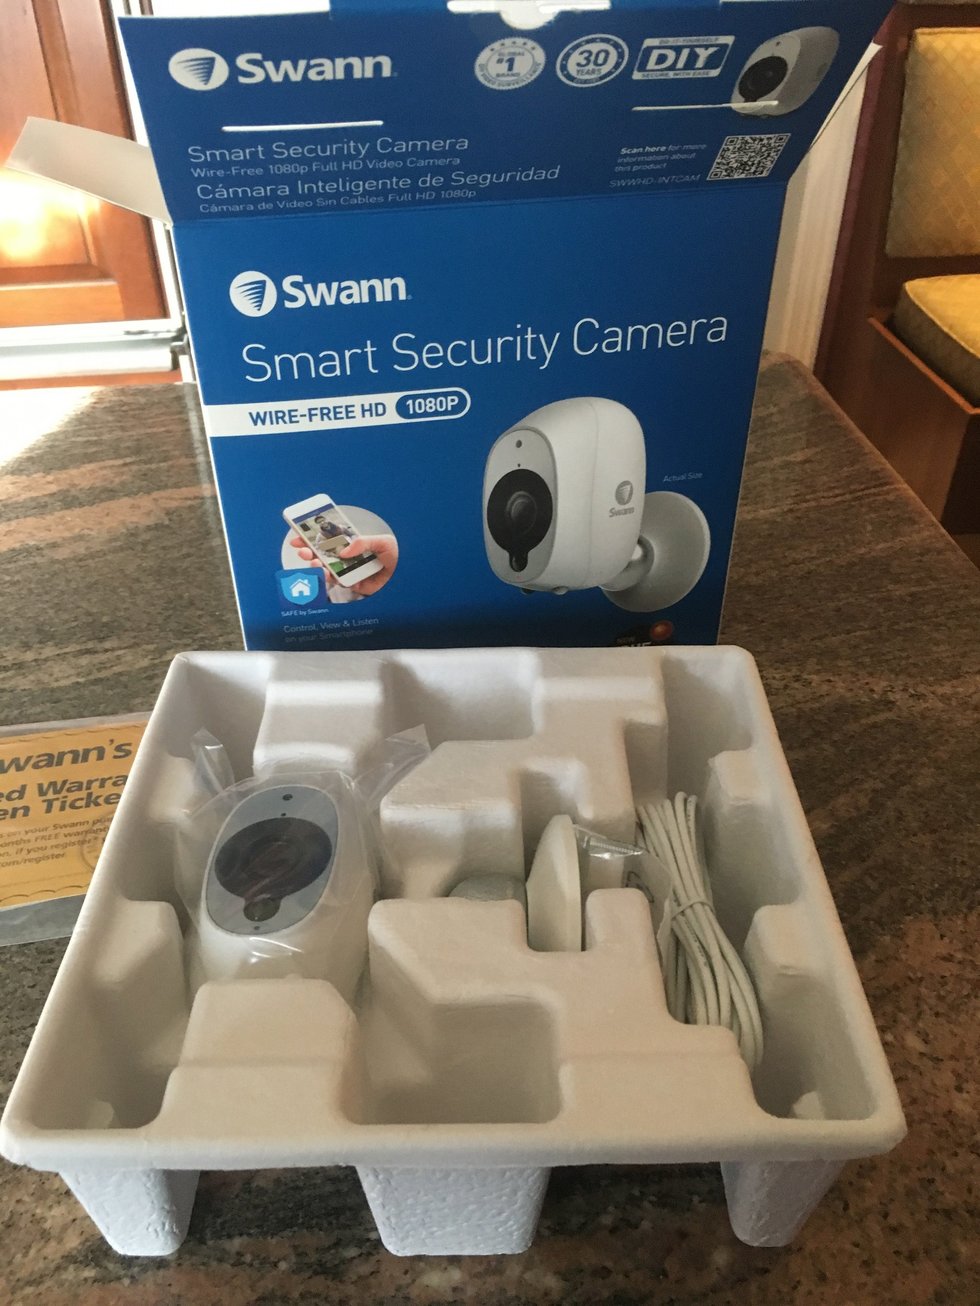 Inside Swann Smart Security Camera Box